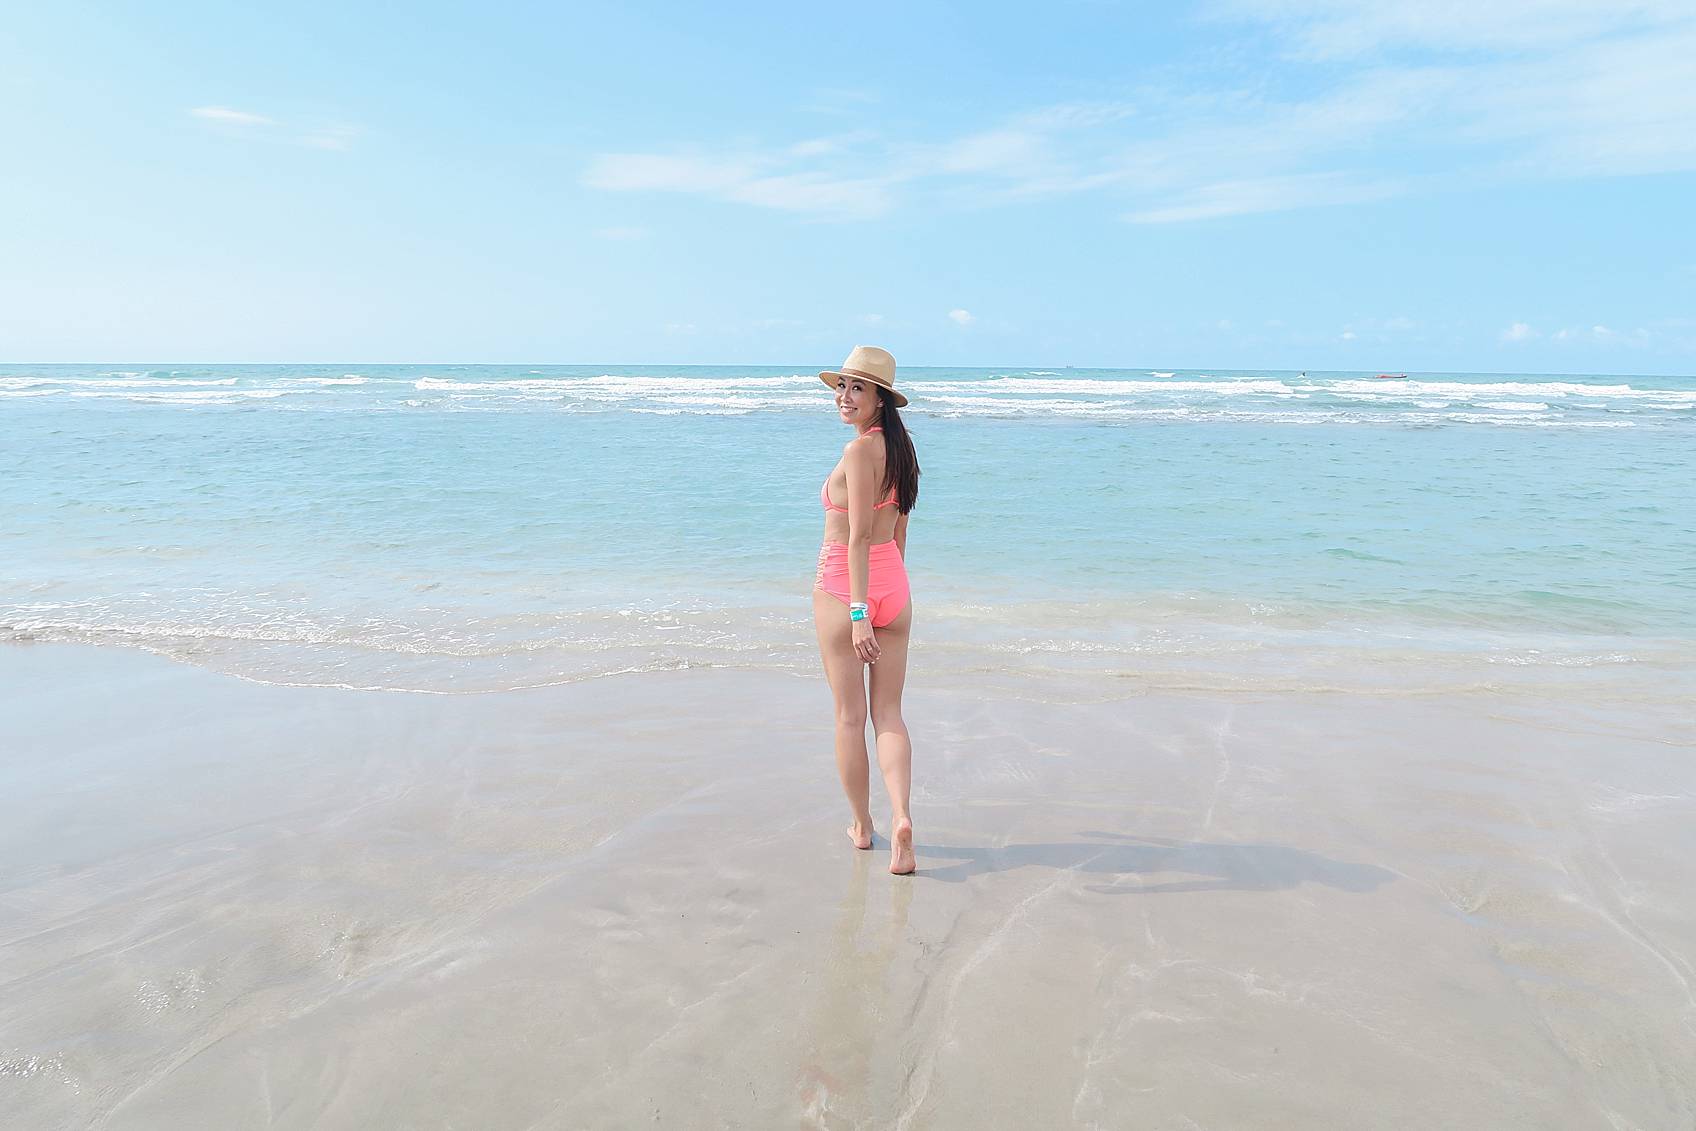 Lifestyle blogger Diana Elizabeth in Puerto Penasco Rocky Point Mexico in water wearing hot pink high waist bikini